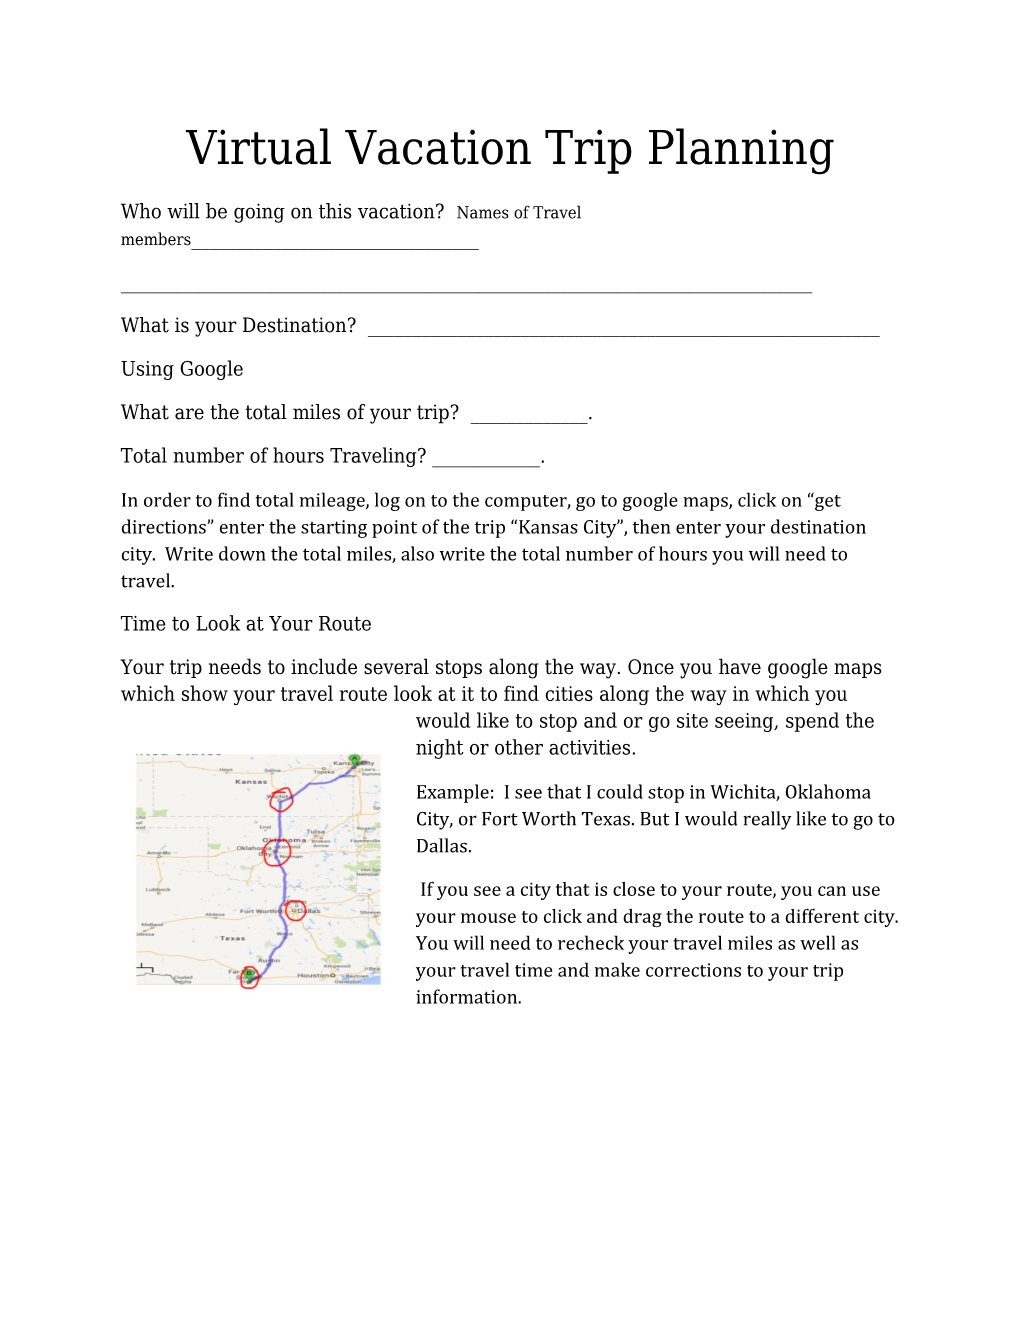 Virtual Vacation Trip Planning